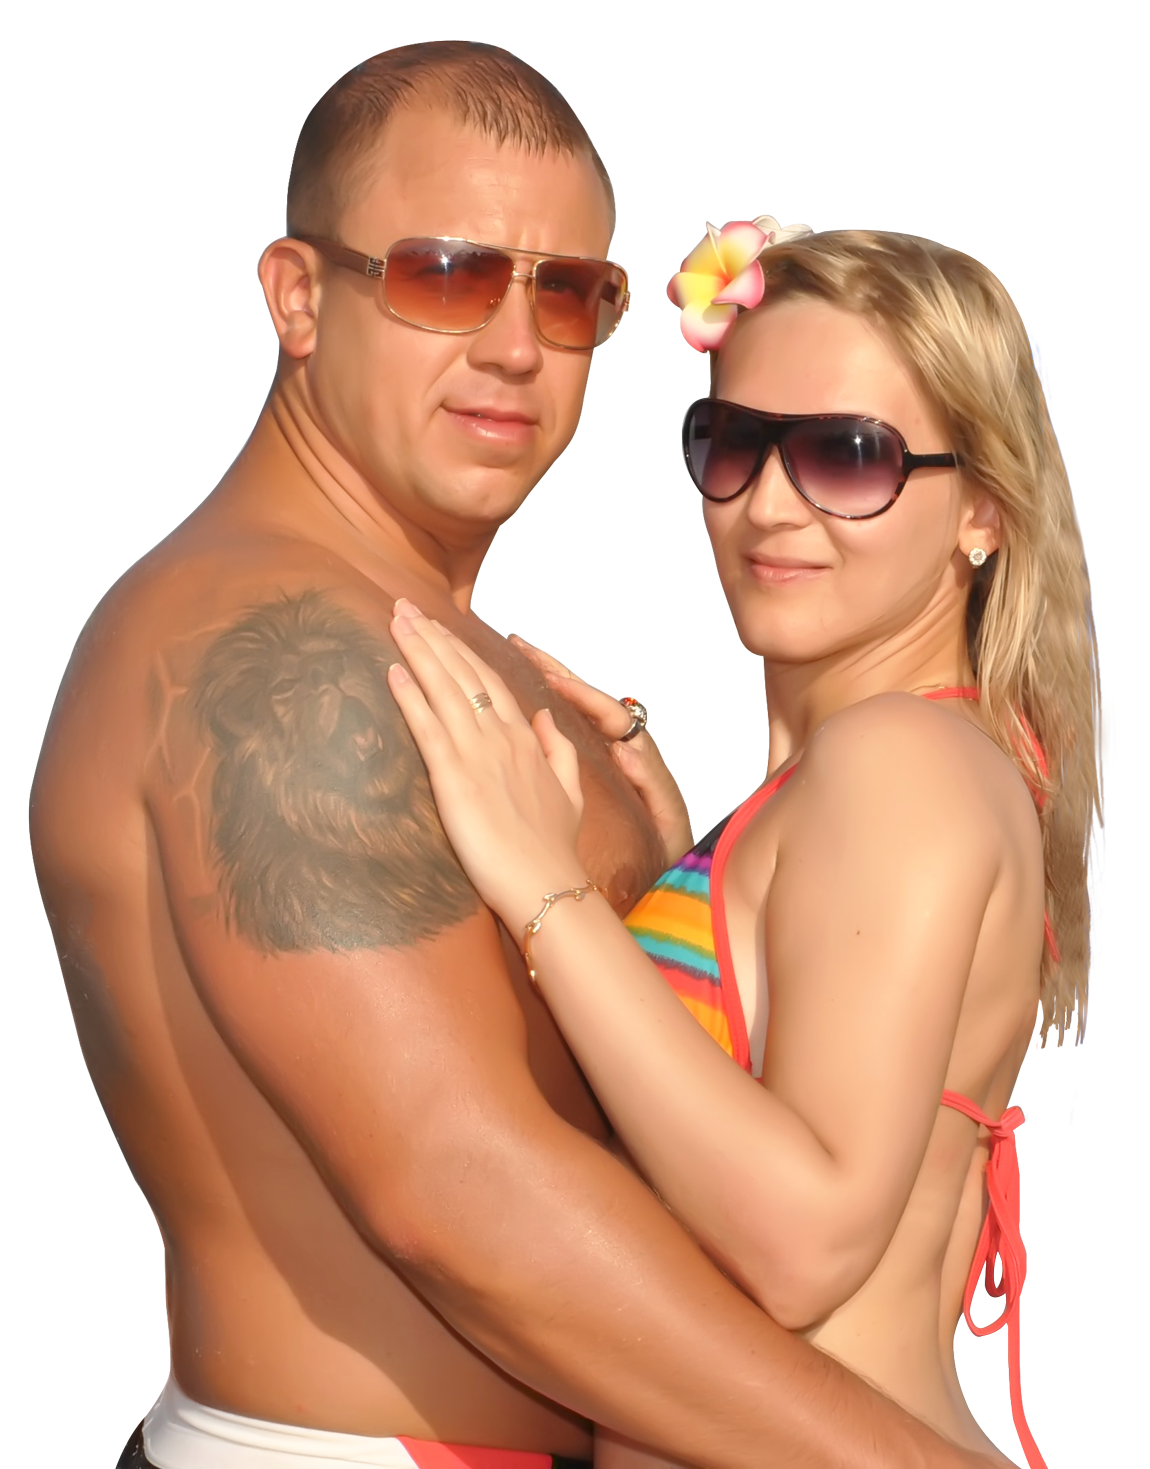 Beachside Couple Embrace PNG image